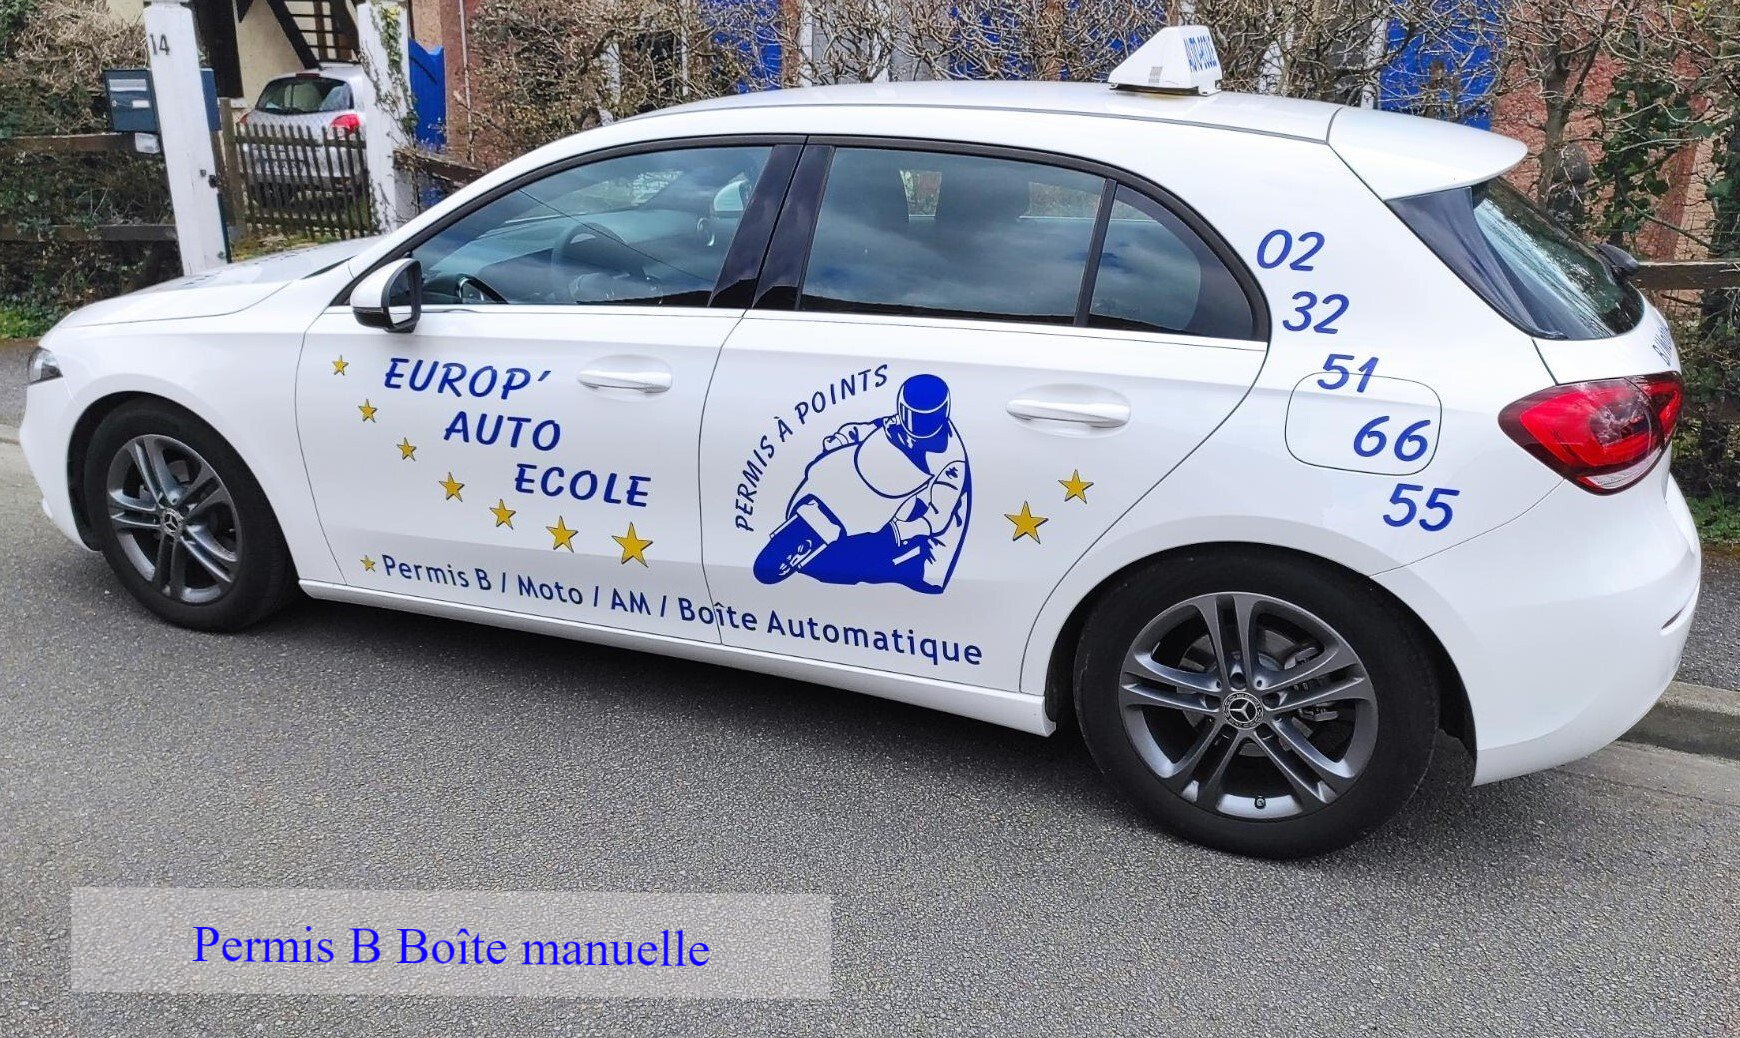 Europ' Auto Ecole Auto Moto